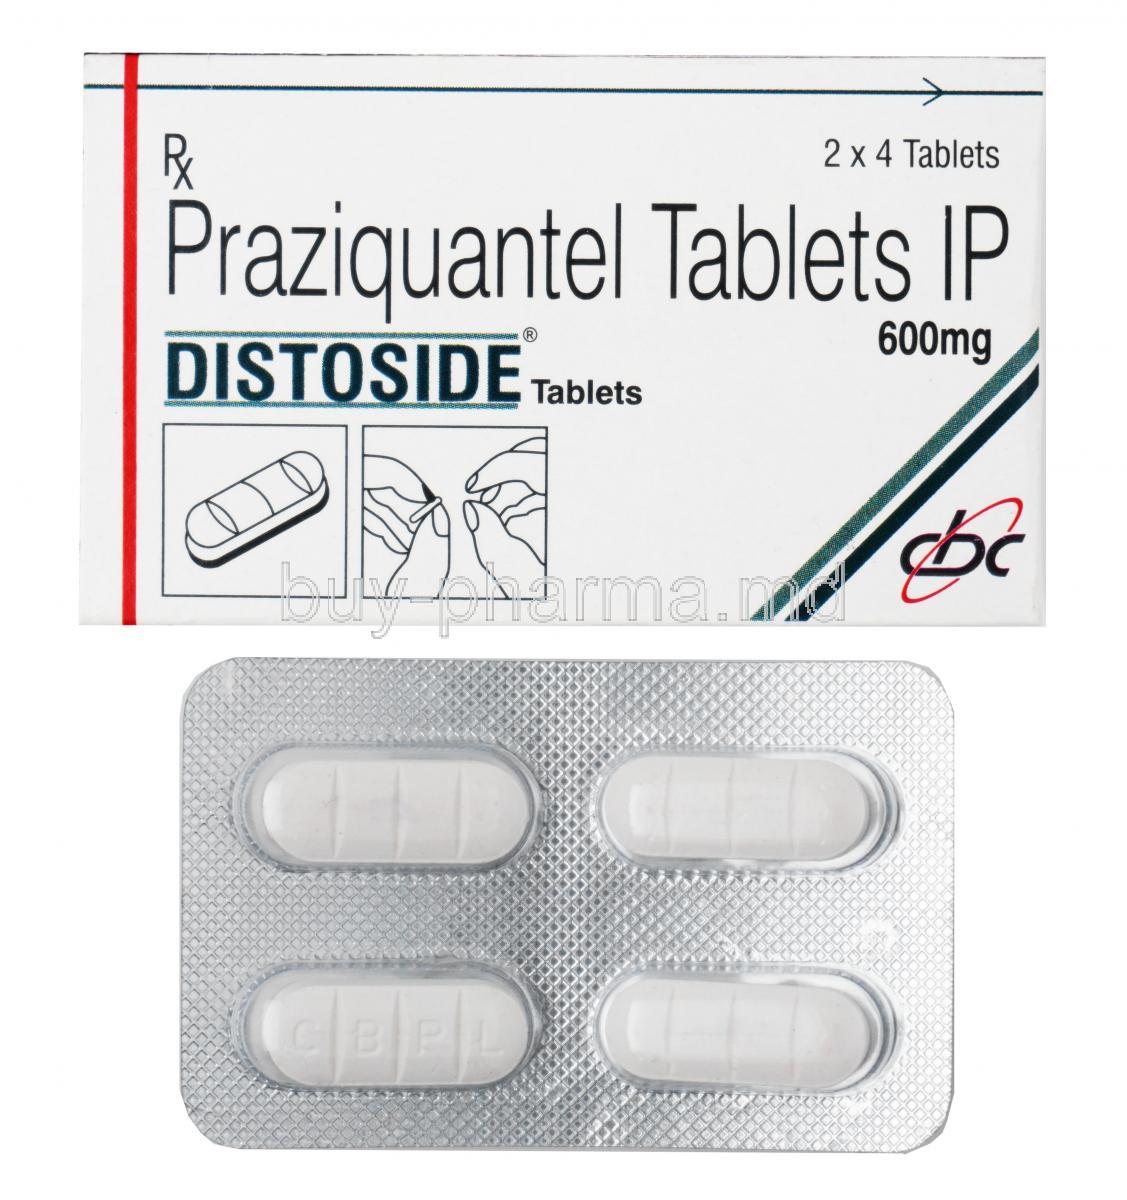 Distoside, Generic Biltricide, Praziquantel 600 mg Tablet (Chandra Bhagat Pharma)